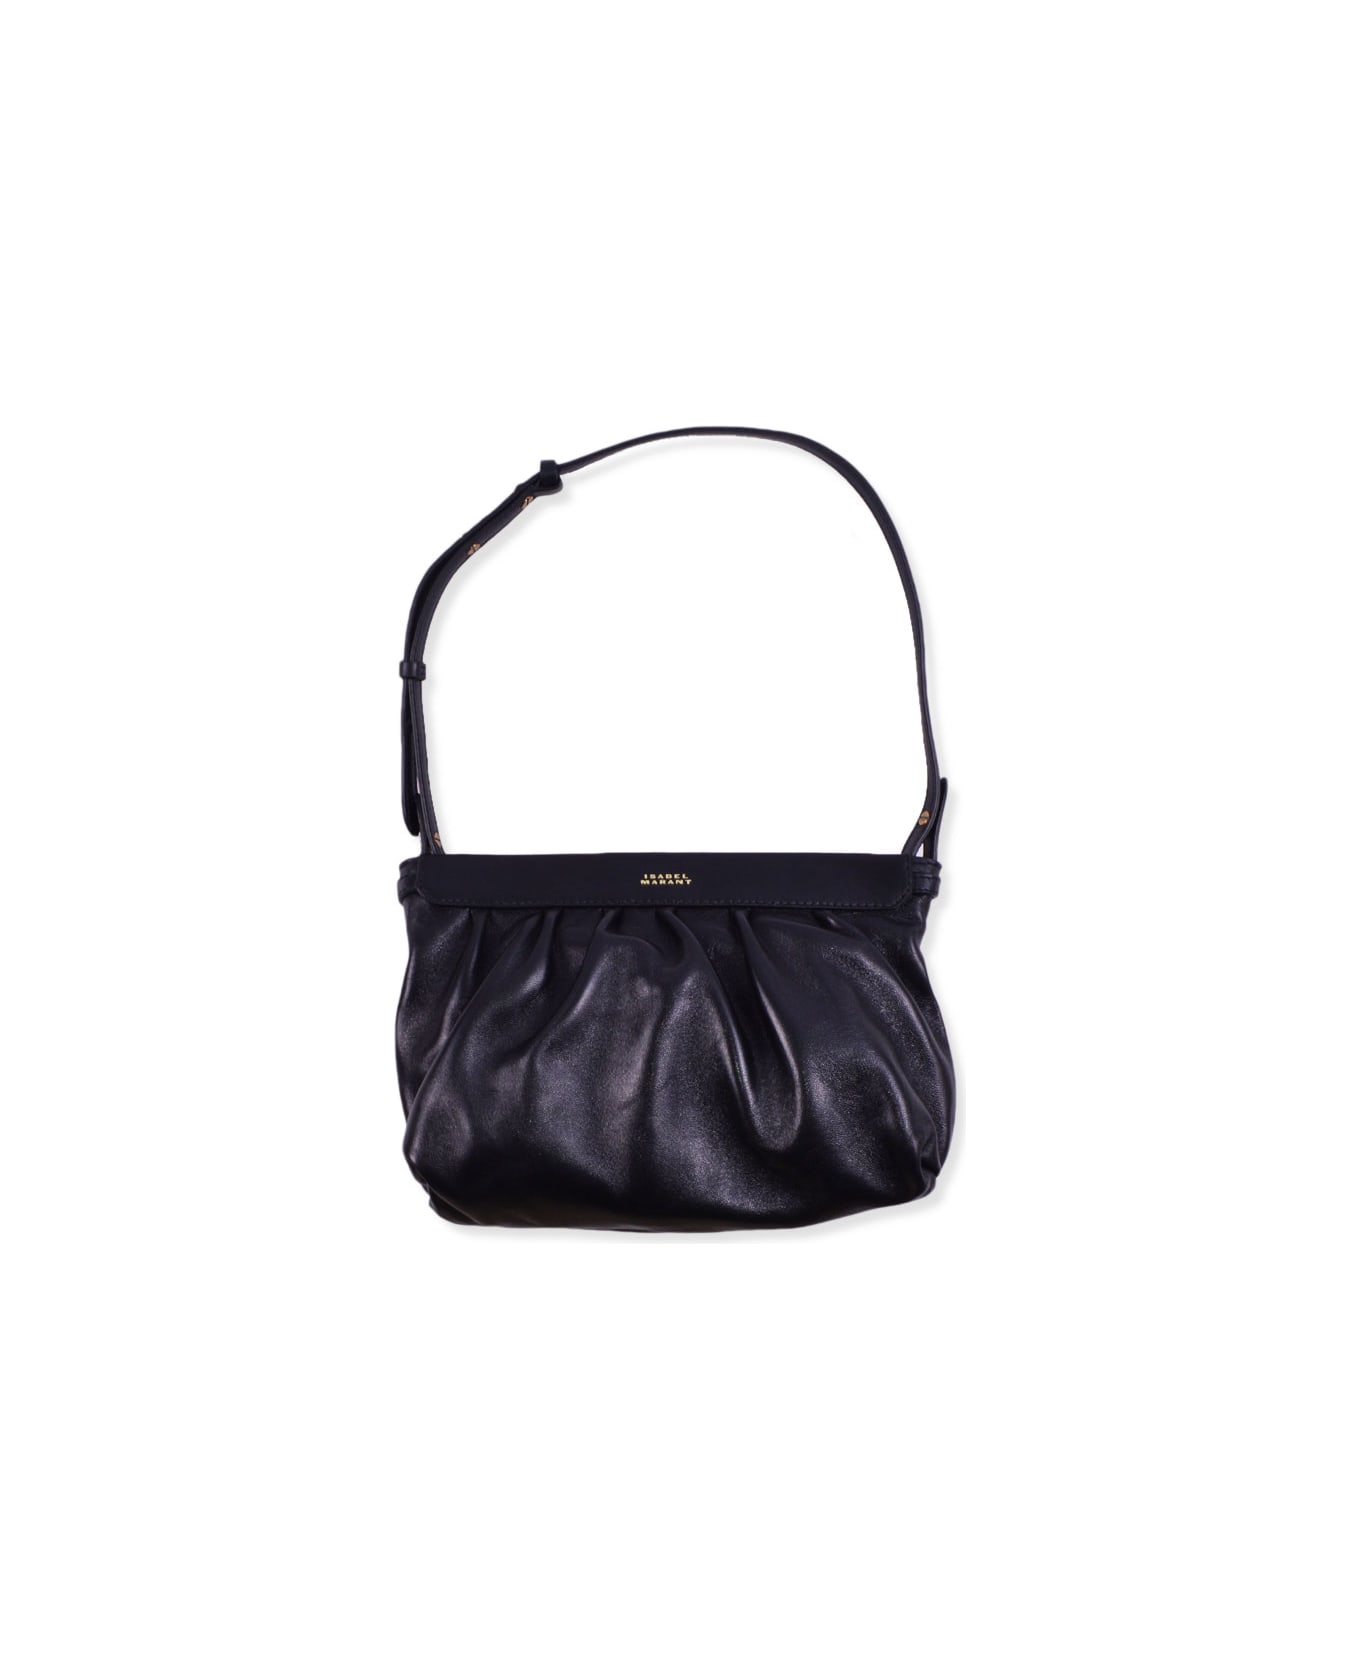 Isabel Marant Handbag - Black/Gold